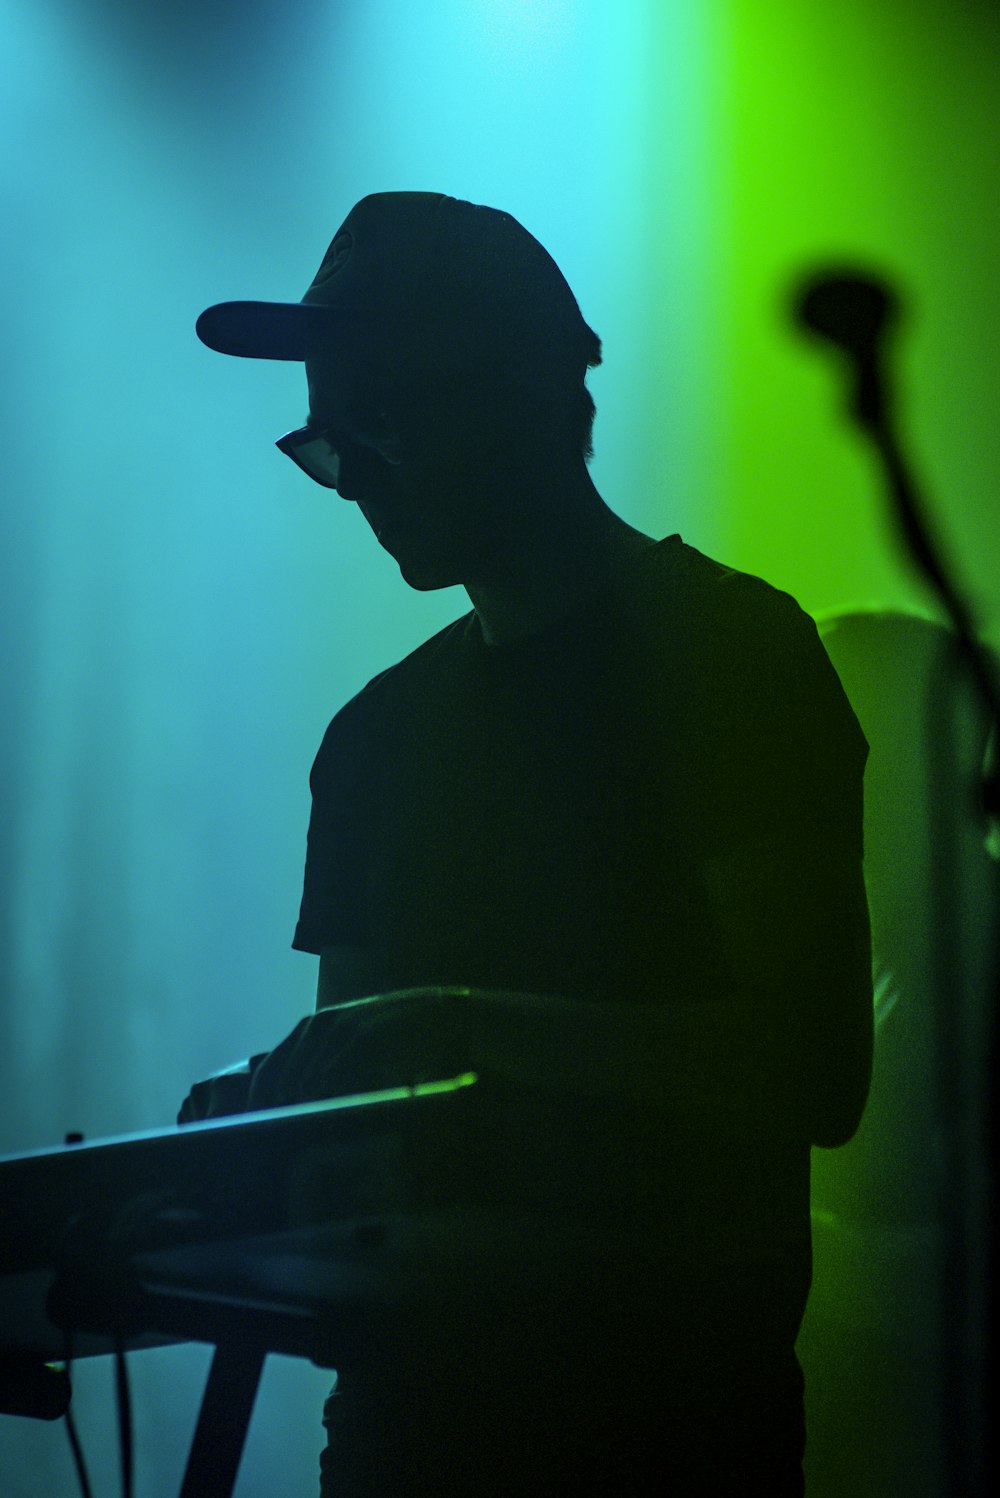 silhouette of man wearing hat